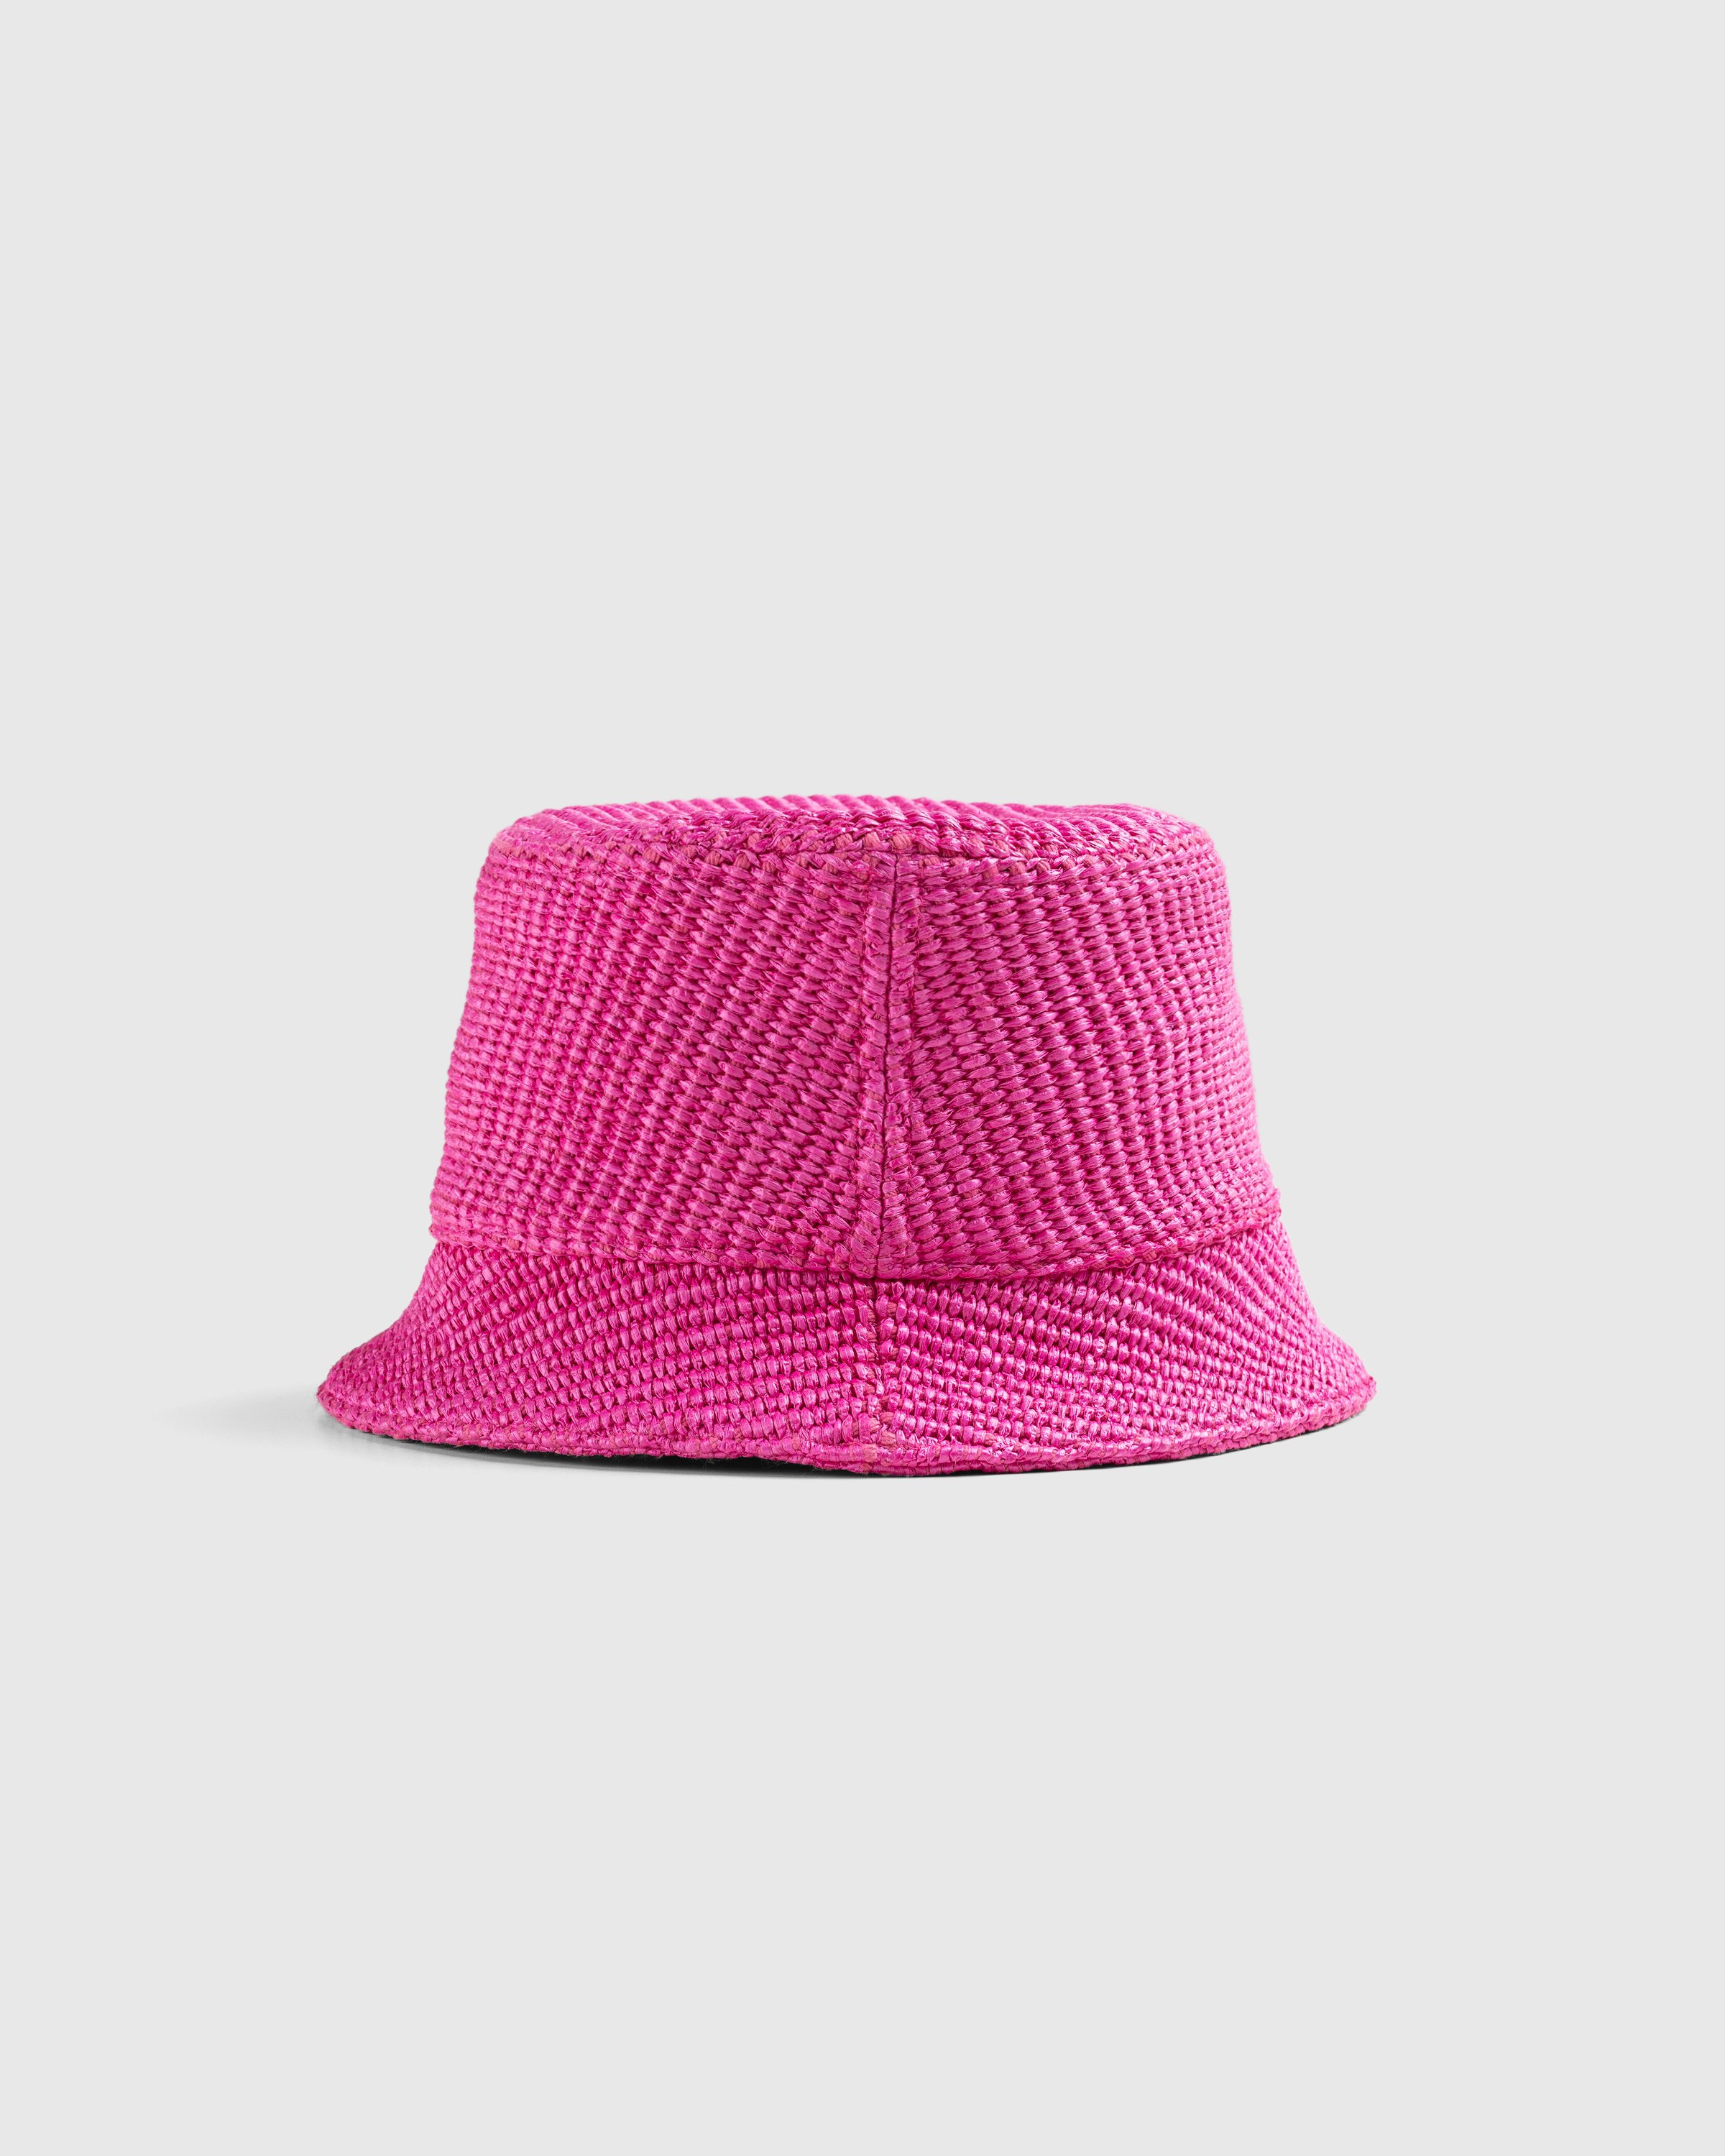 Marni x No Vacancy Inn - Raffia Bucket Hat Fuschia - Accessories - Pink - Image 2